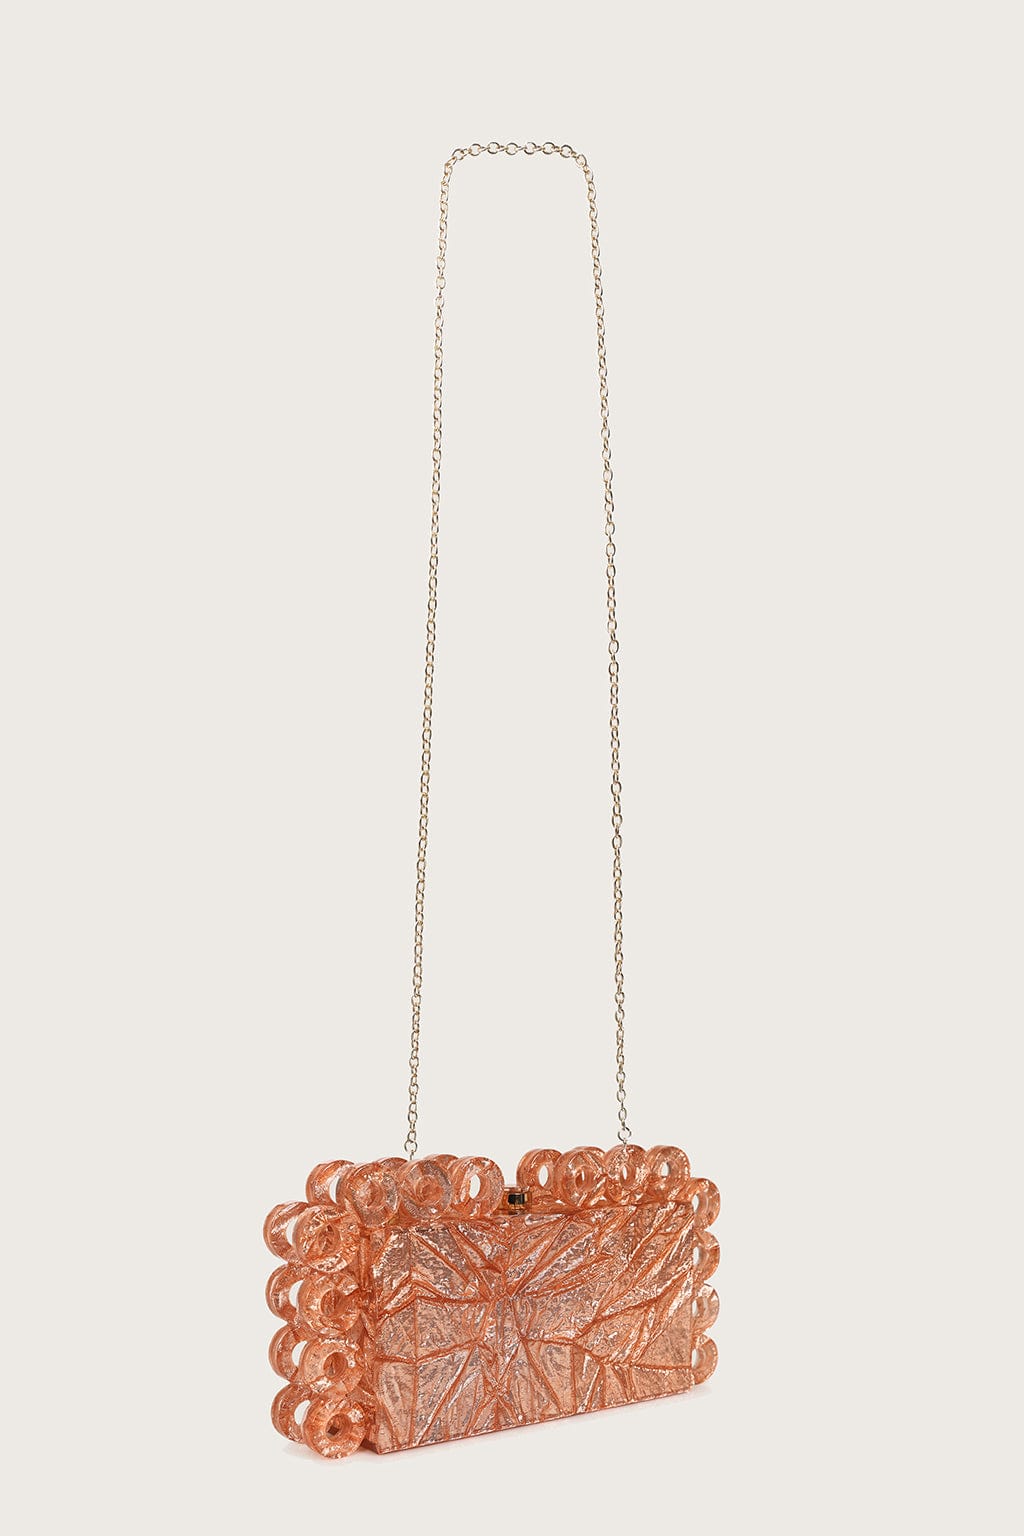 CELESTE Circular Textured Box Clutch Bag in Rose Gold